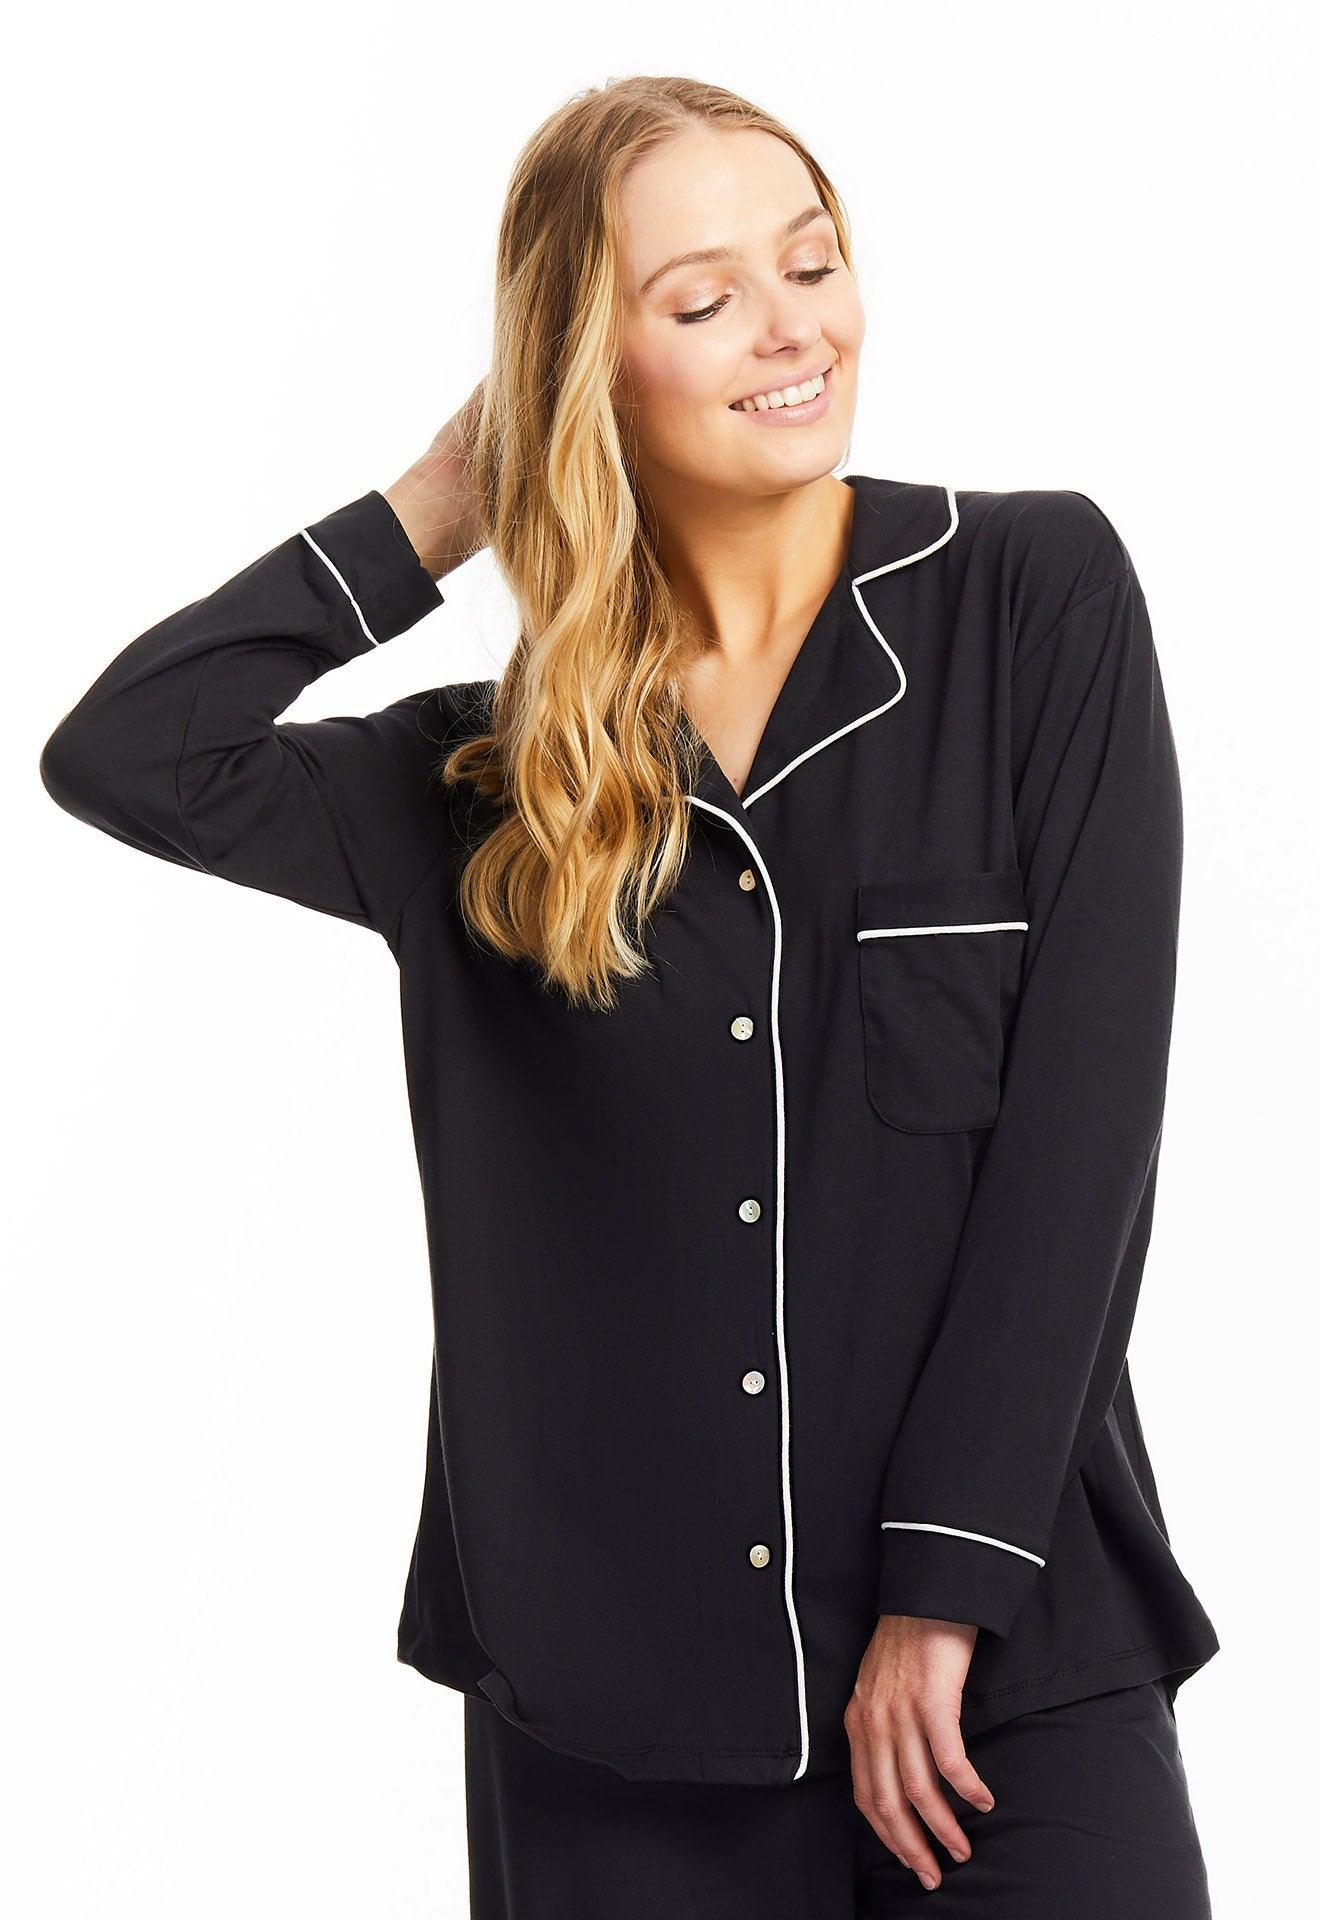 Women's Cooling Sleepwear | Cooling Pajamas – Lusome Sleepwear USA